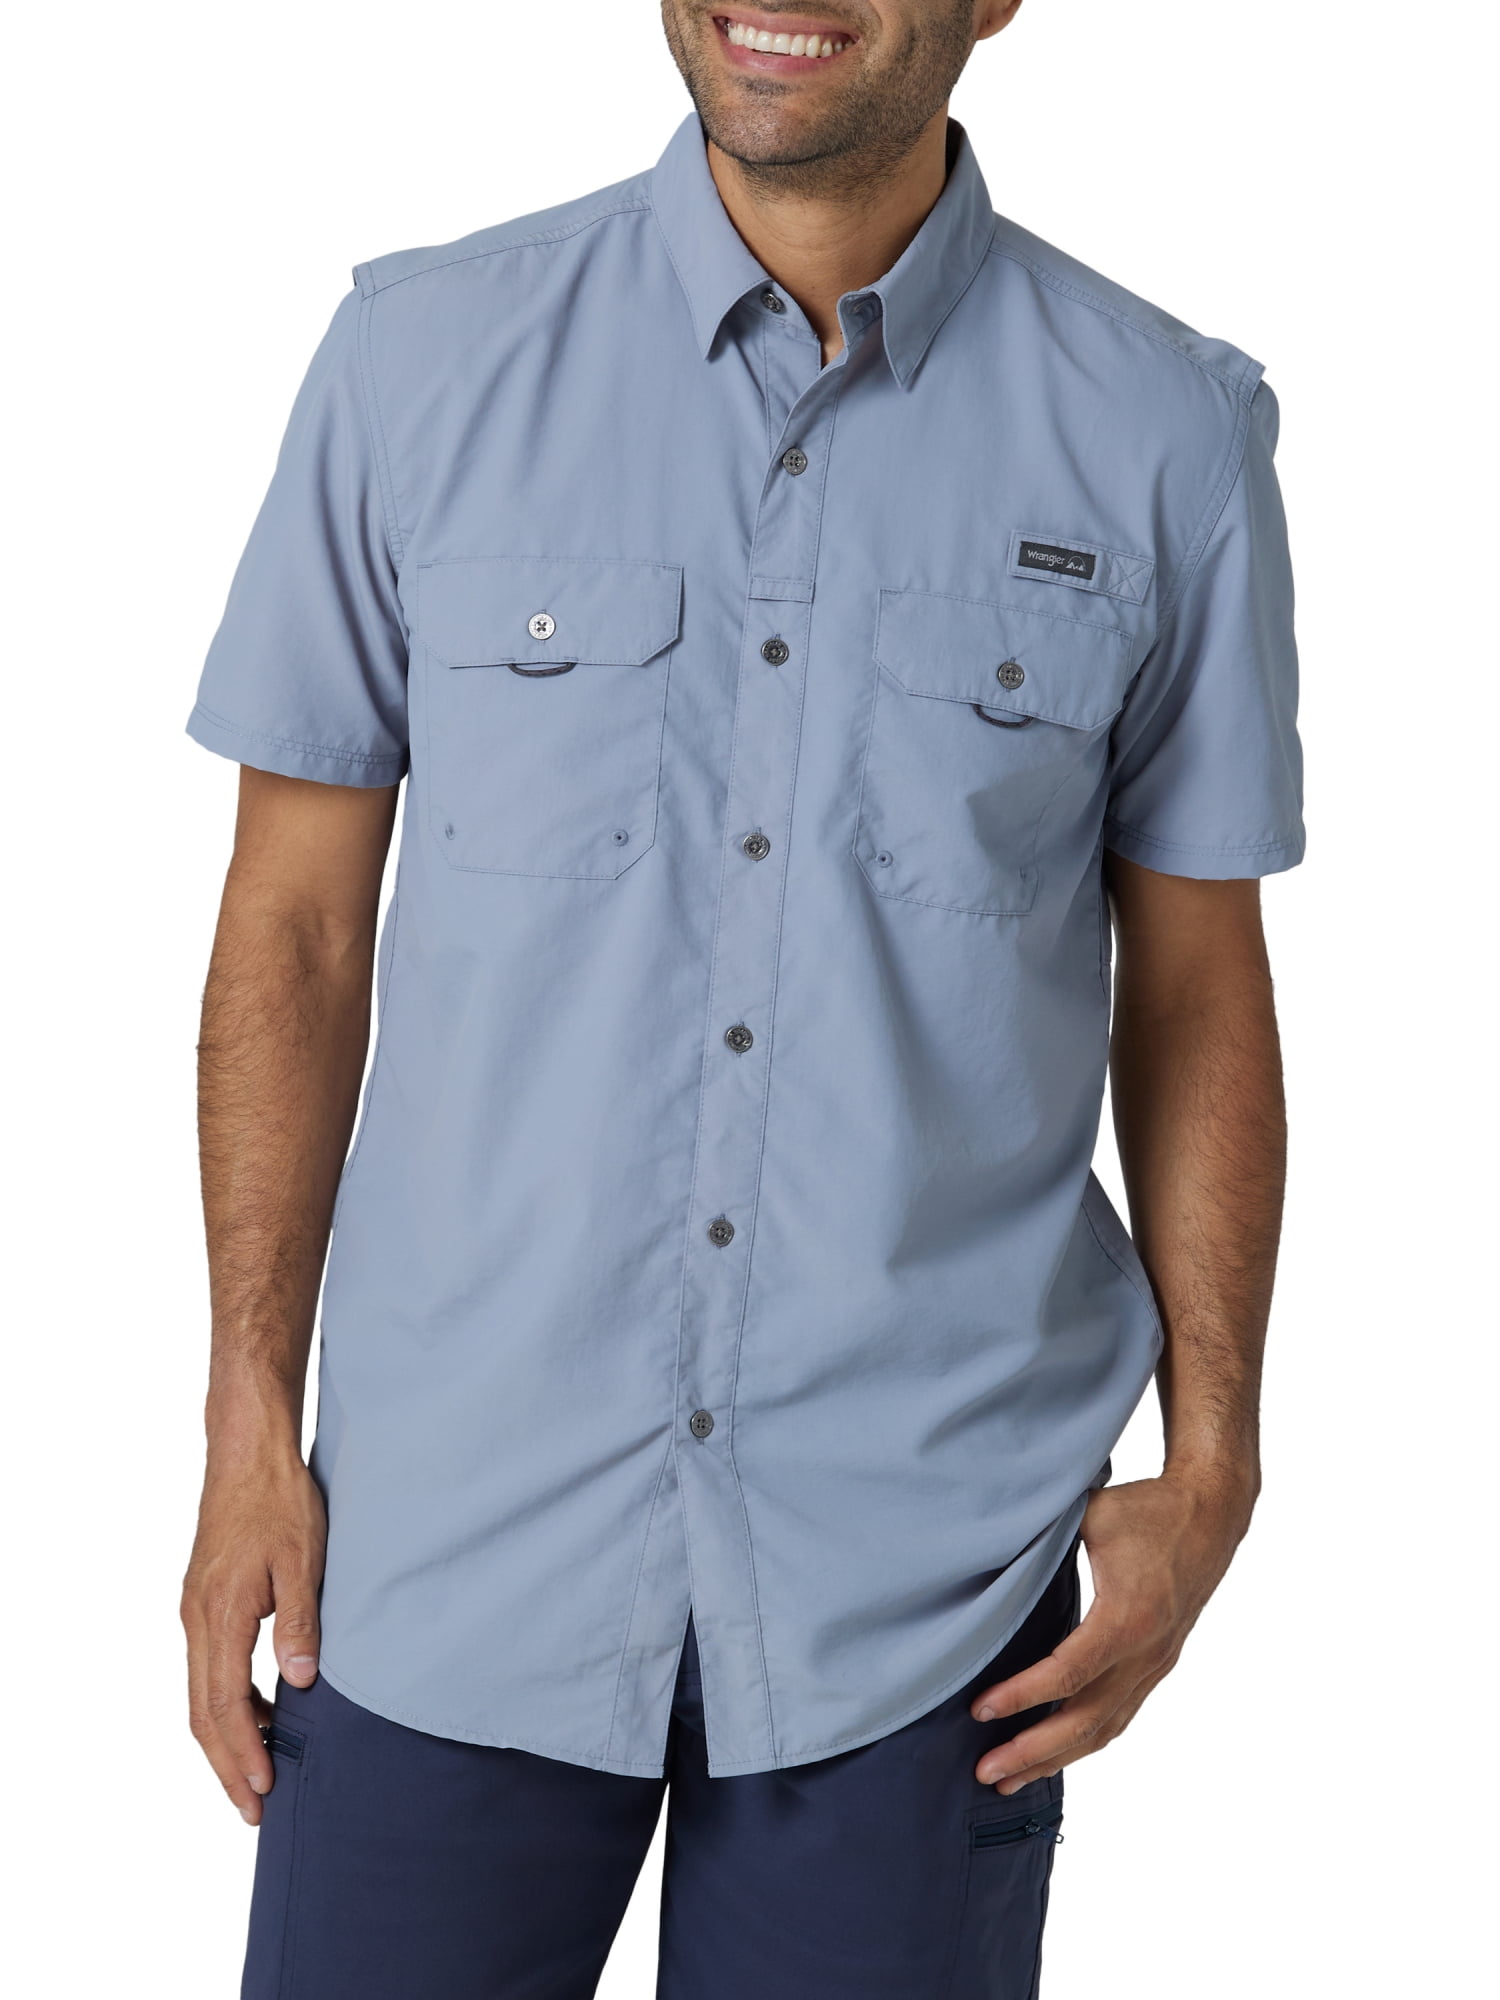 Wrangler Men's Outdoor Short Sleeve Fishing Shirt with UPF 30+